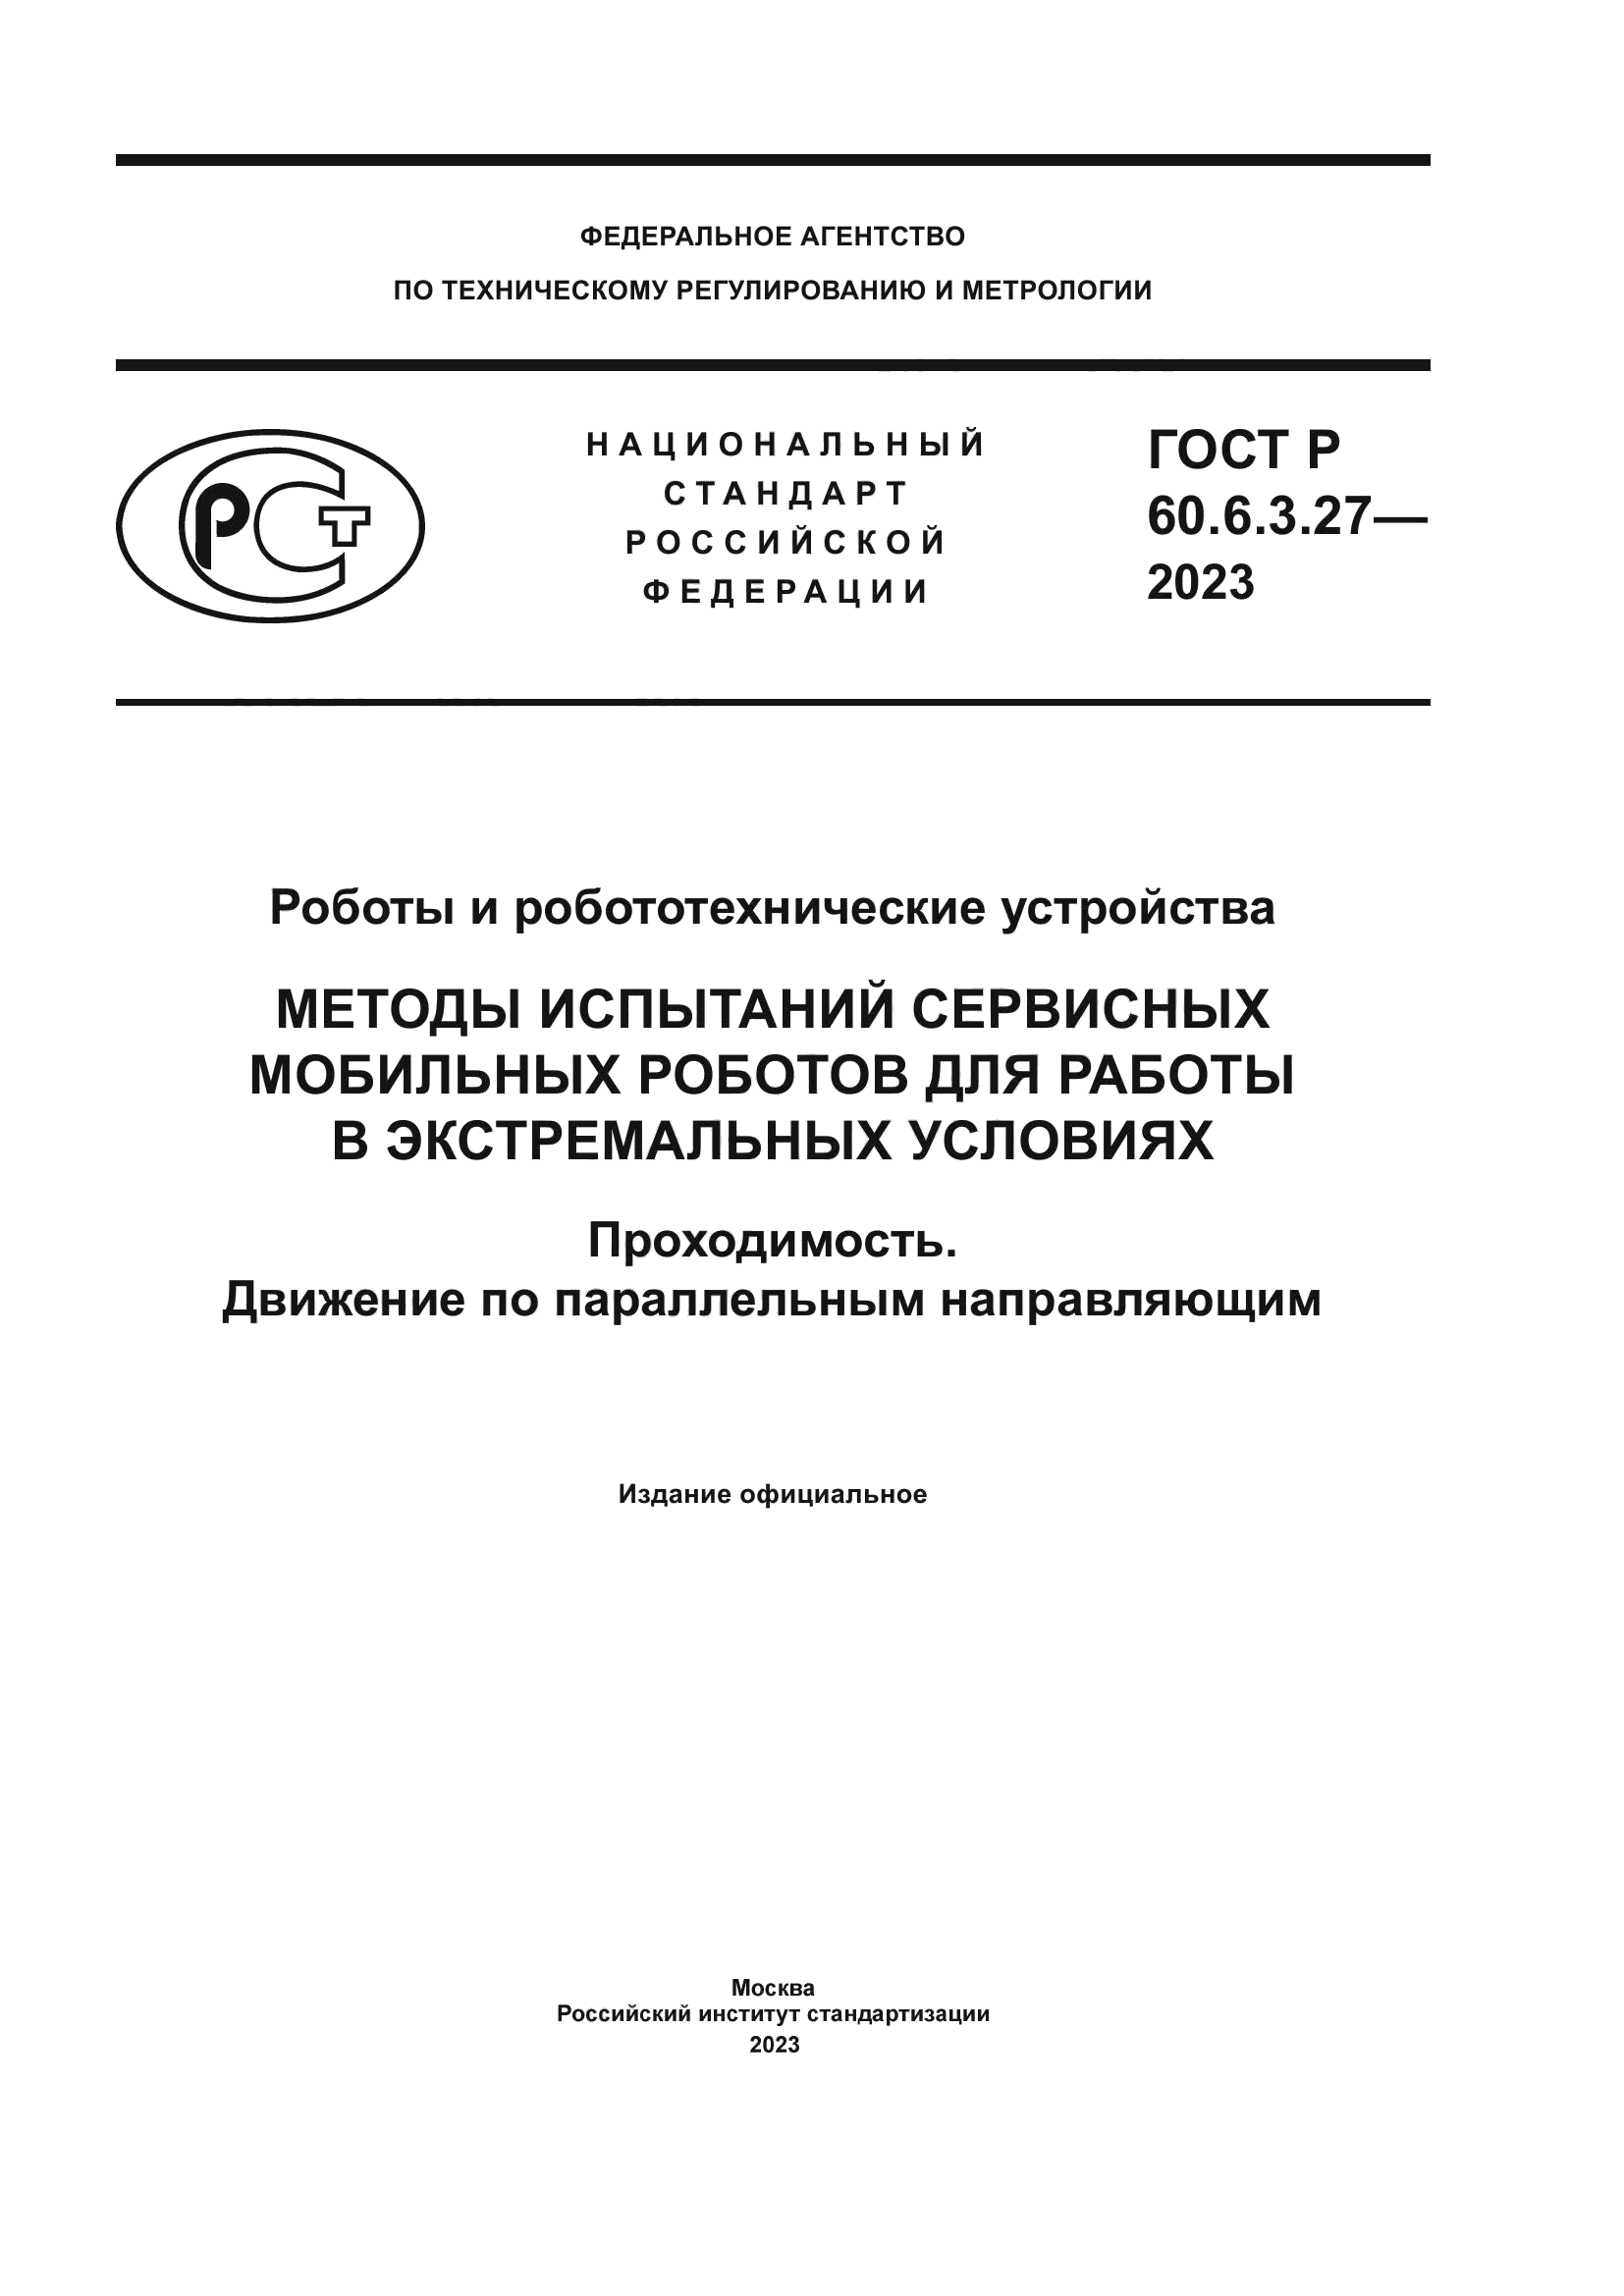 ГОСТ Р 60.6.3.27-2023